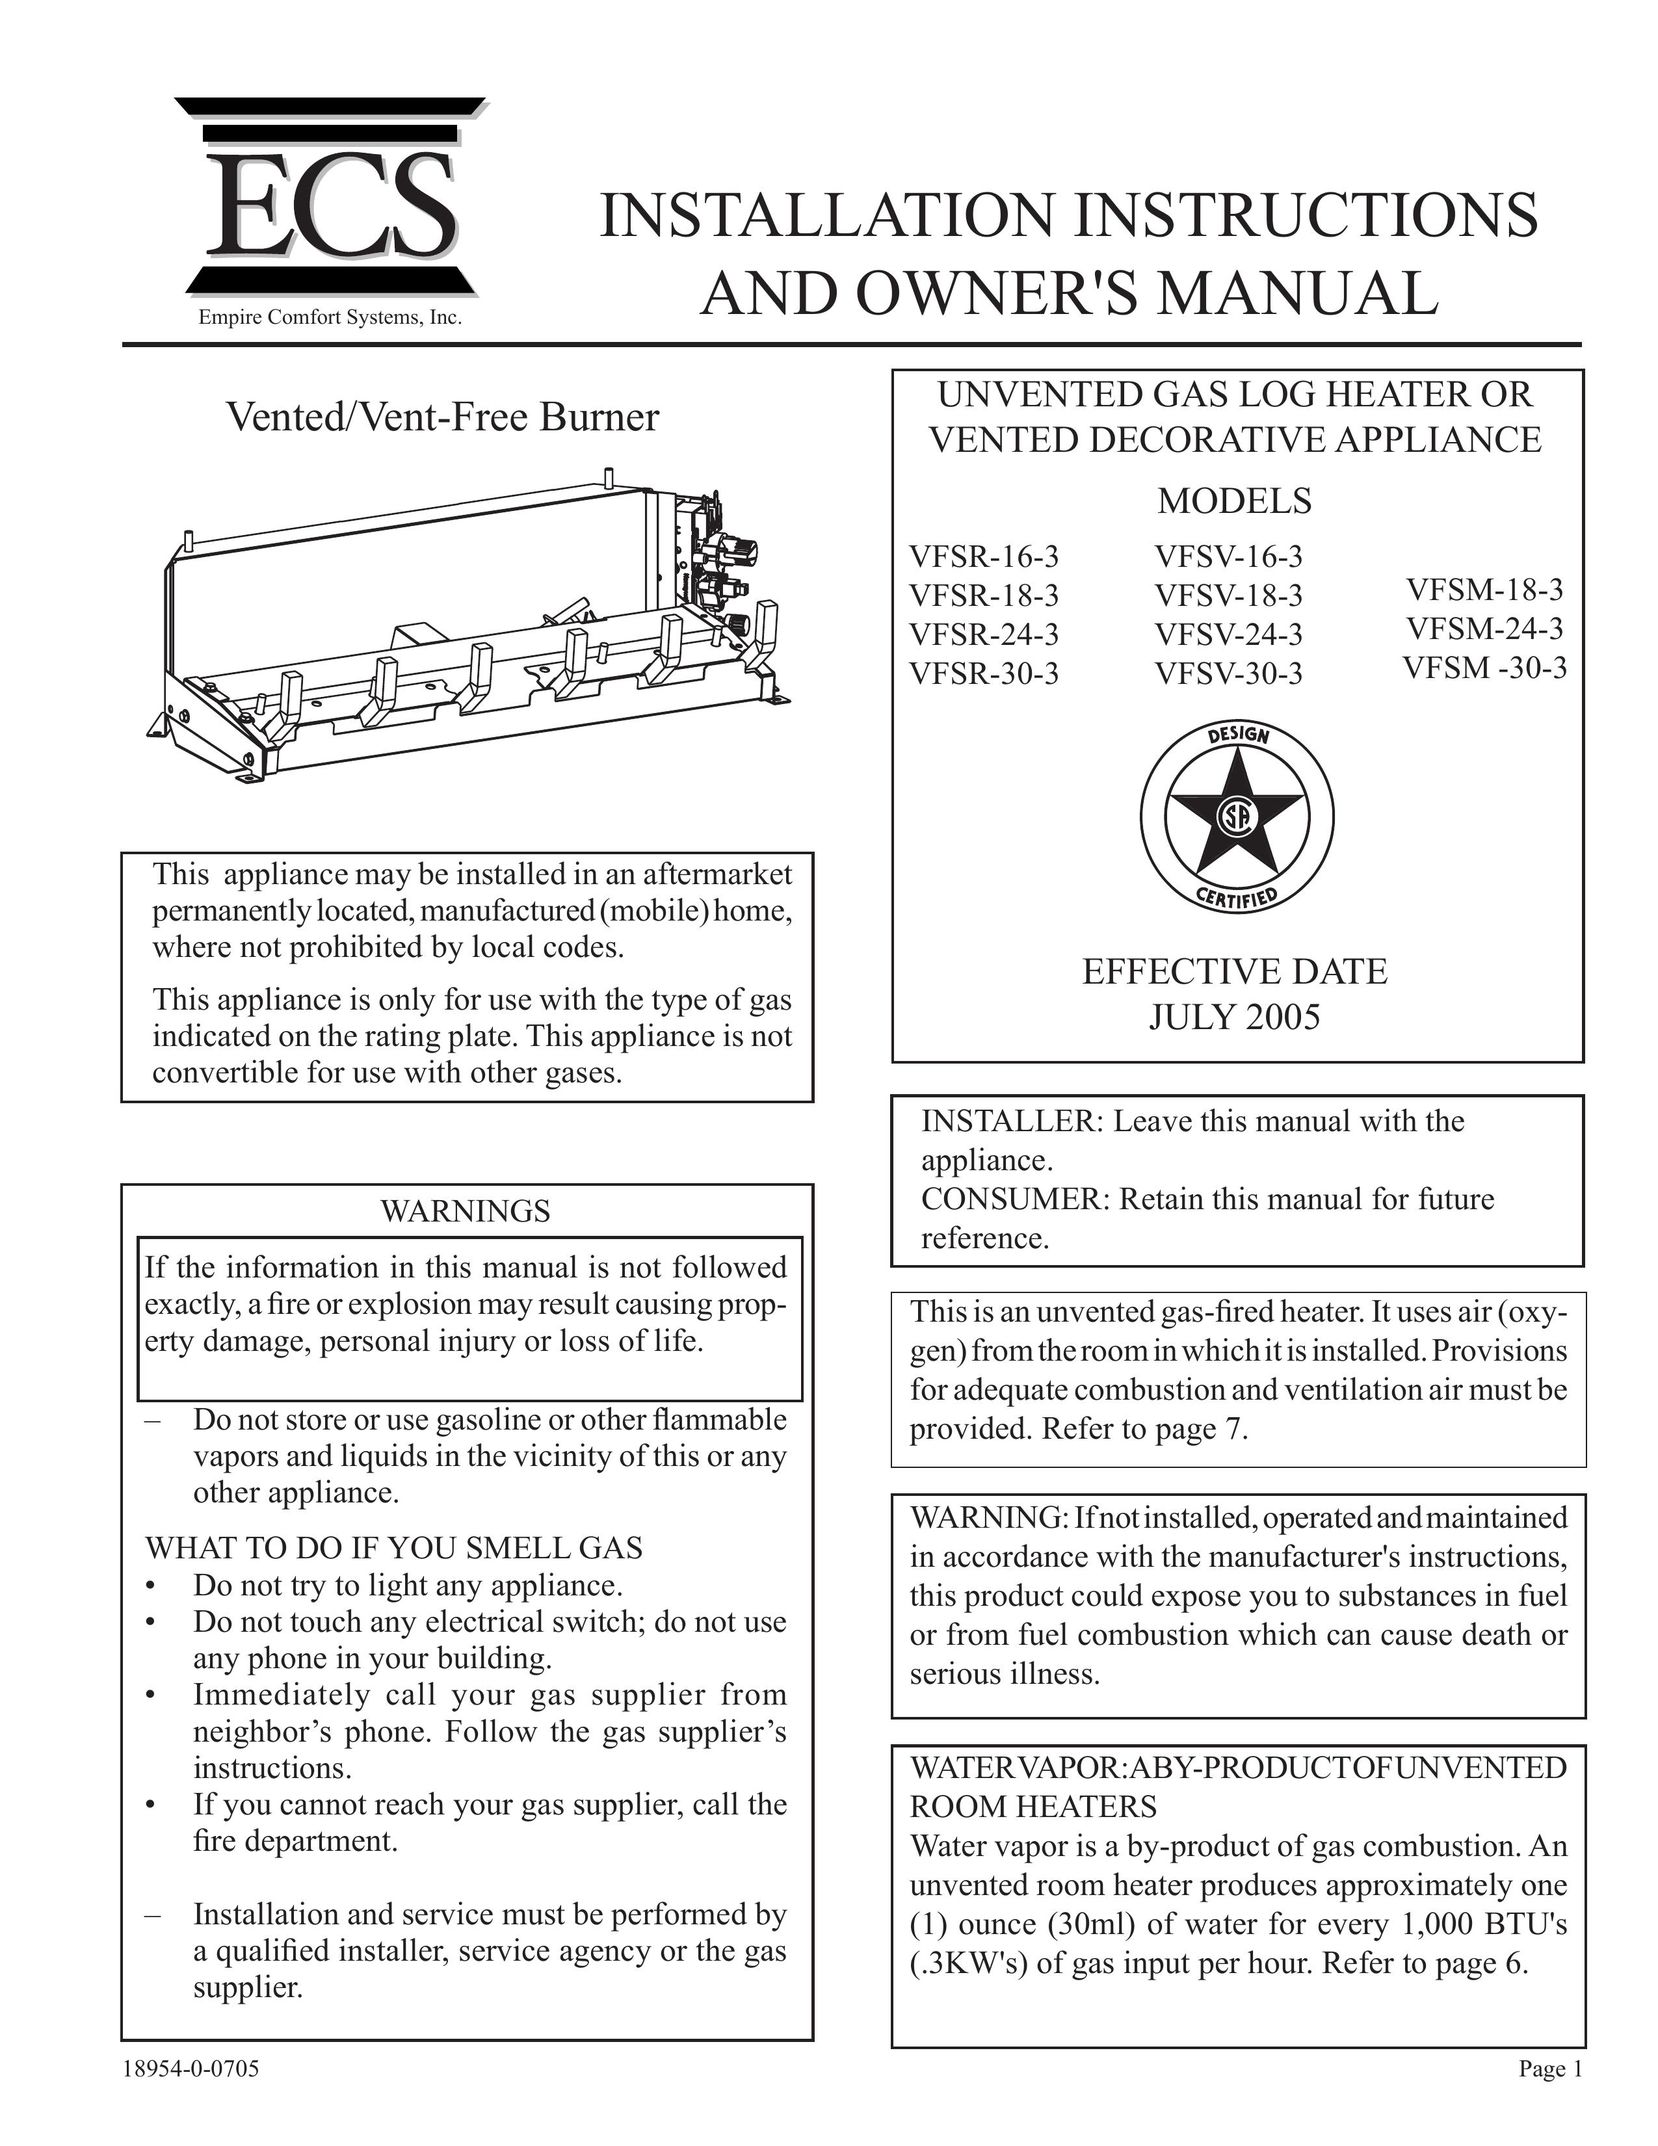 Empire Comfort Systems VFSV-30-3 Fan User Manual